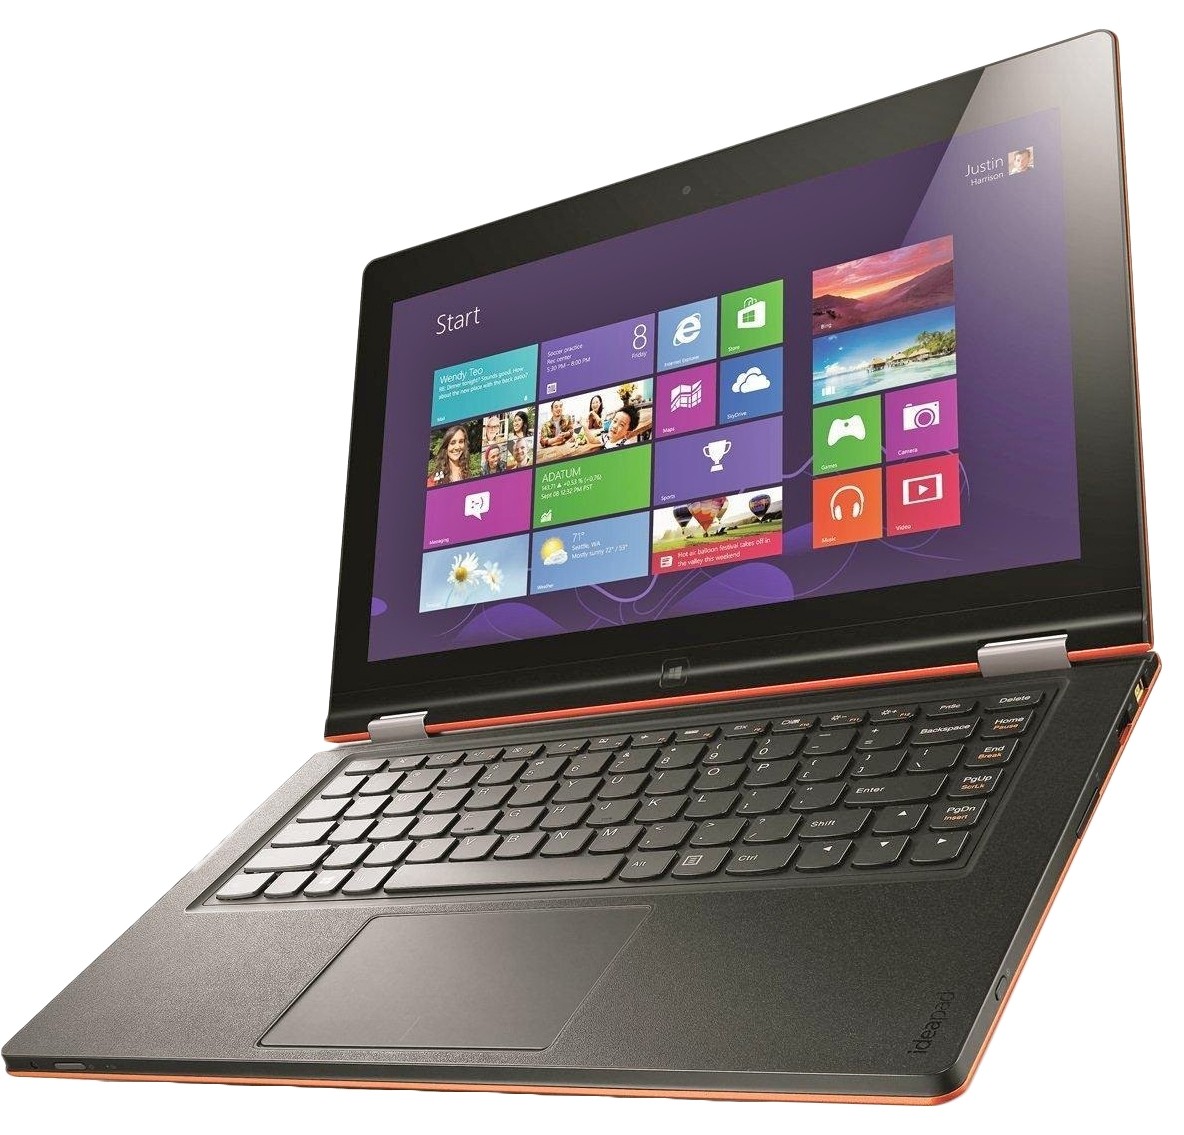 Lenovo IdeaPad Yoga 13 (59-365081) - зображення 1